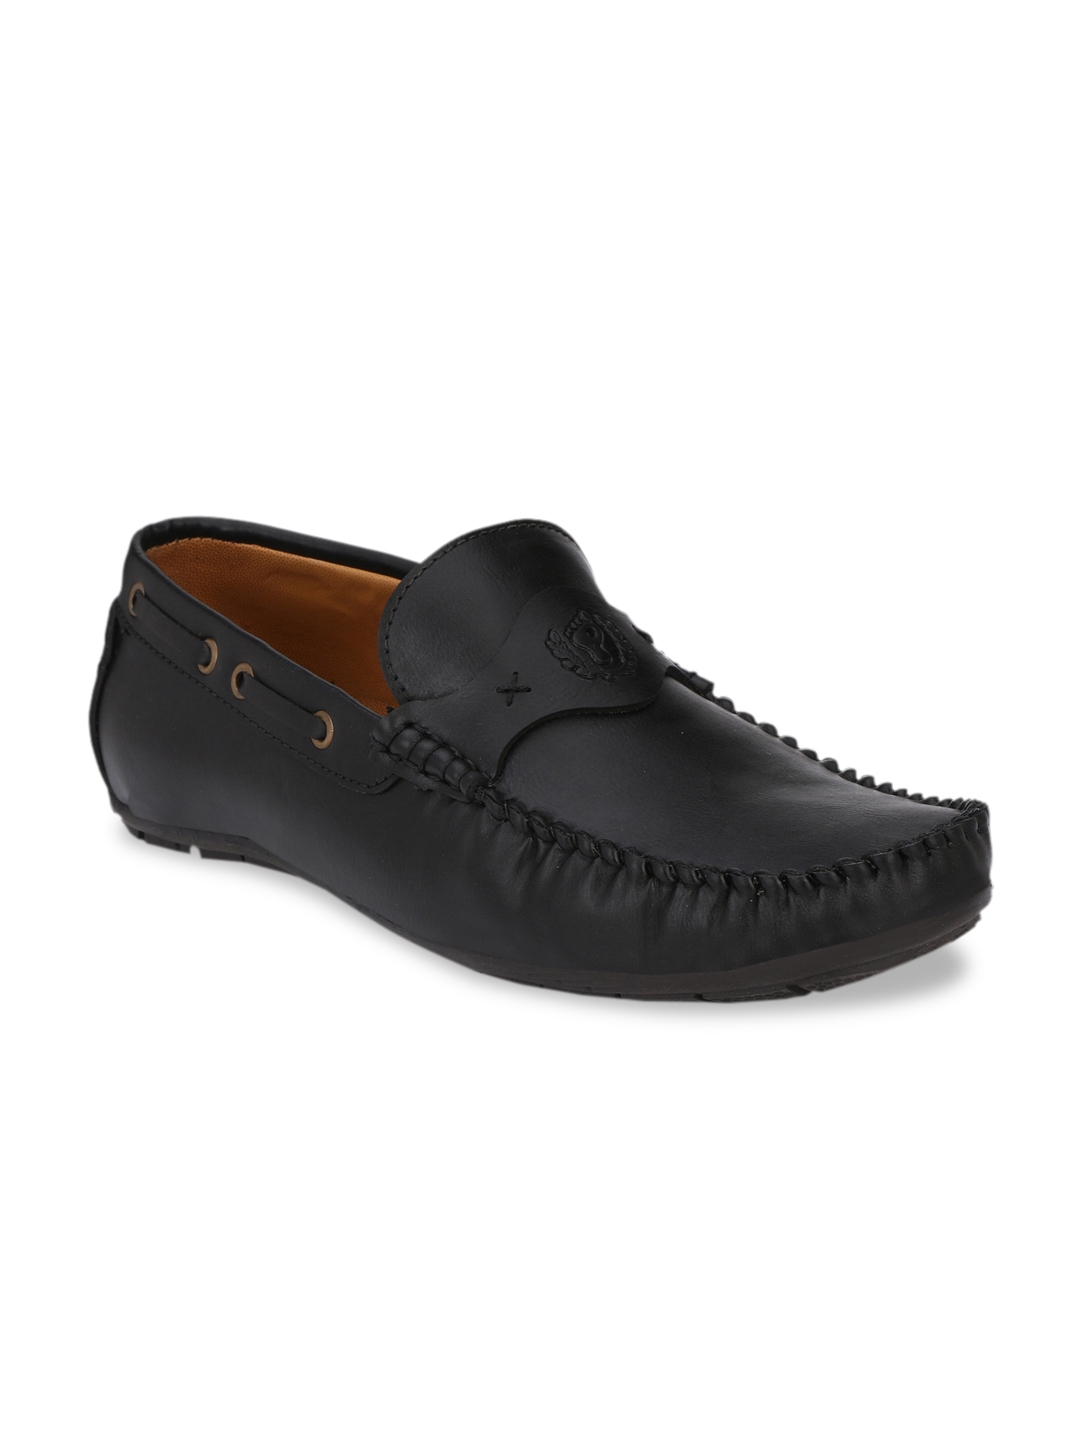 Buy Prolific Men Black Boat Shoes - Casual Shoes for Men 9766595 | Myntra